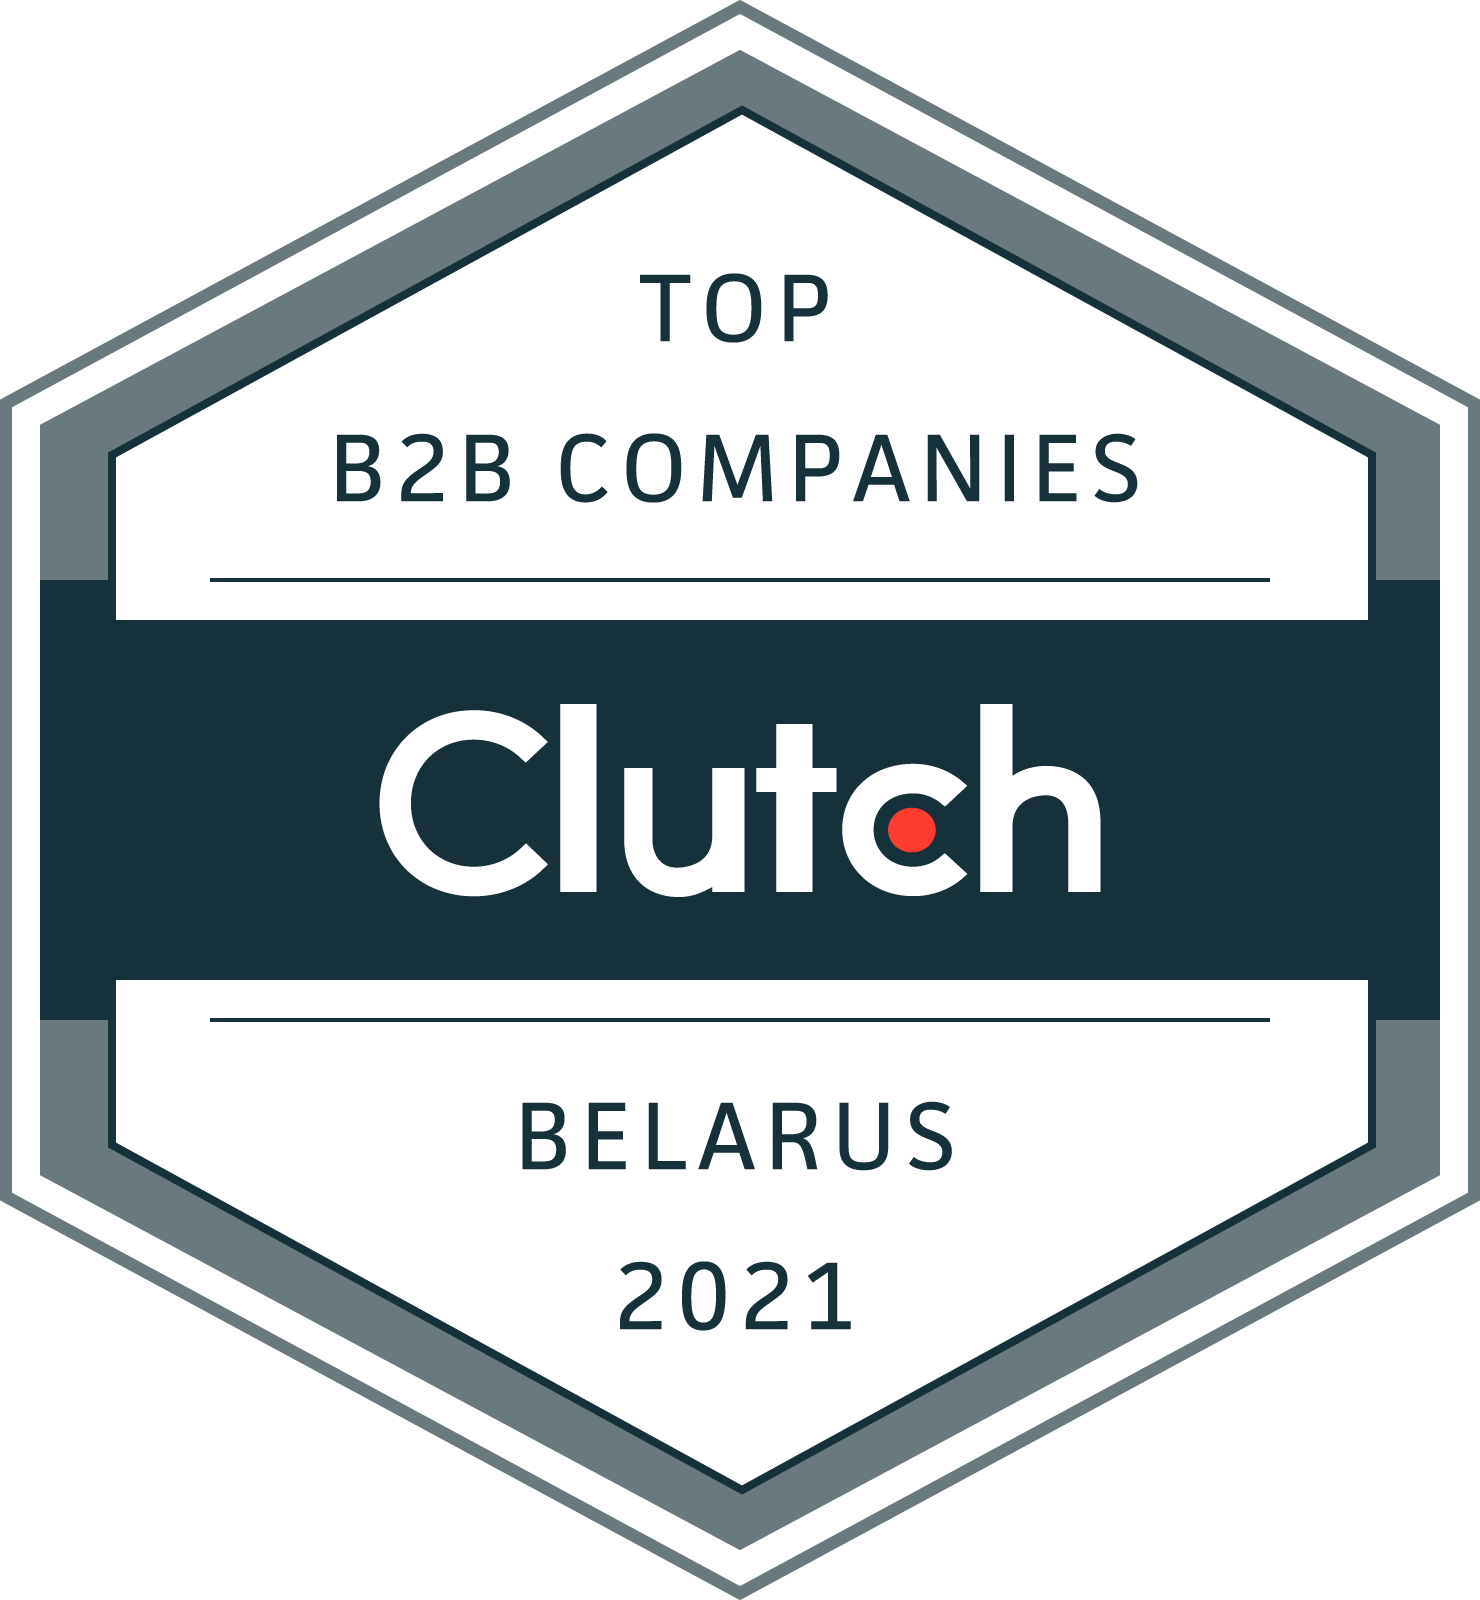 top iot companies in belarus by Clutch 